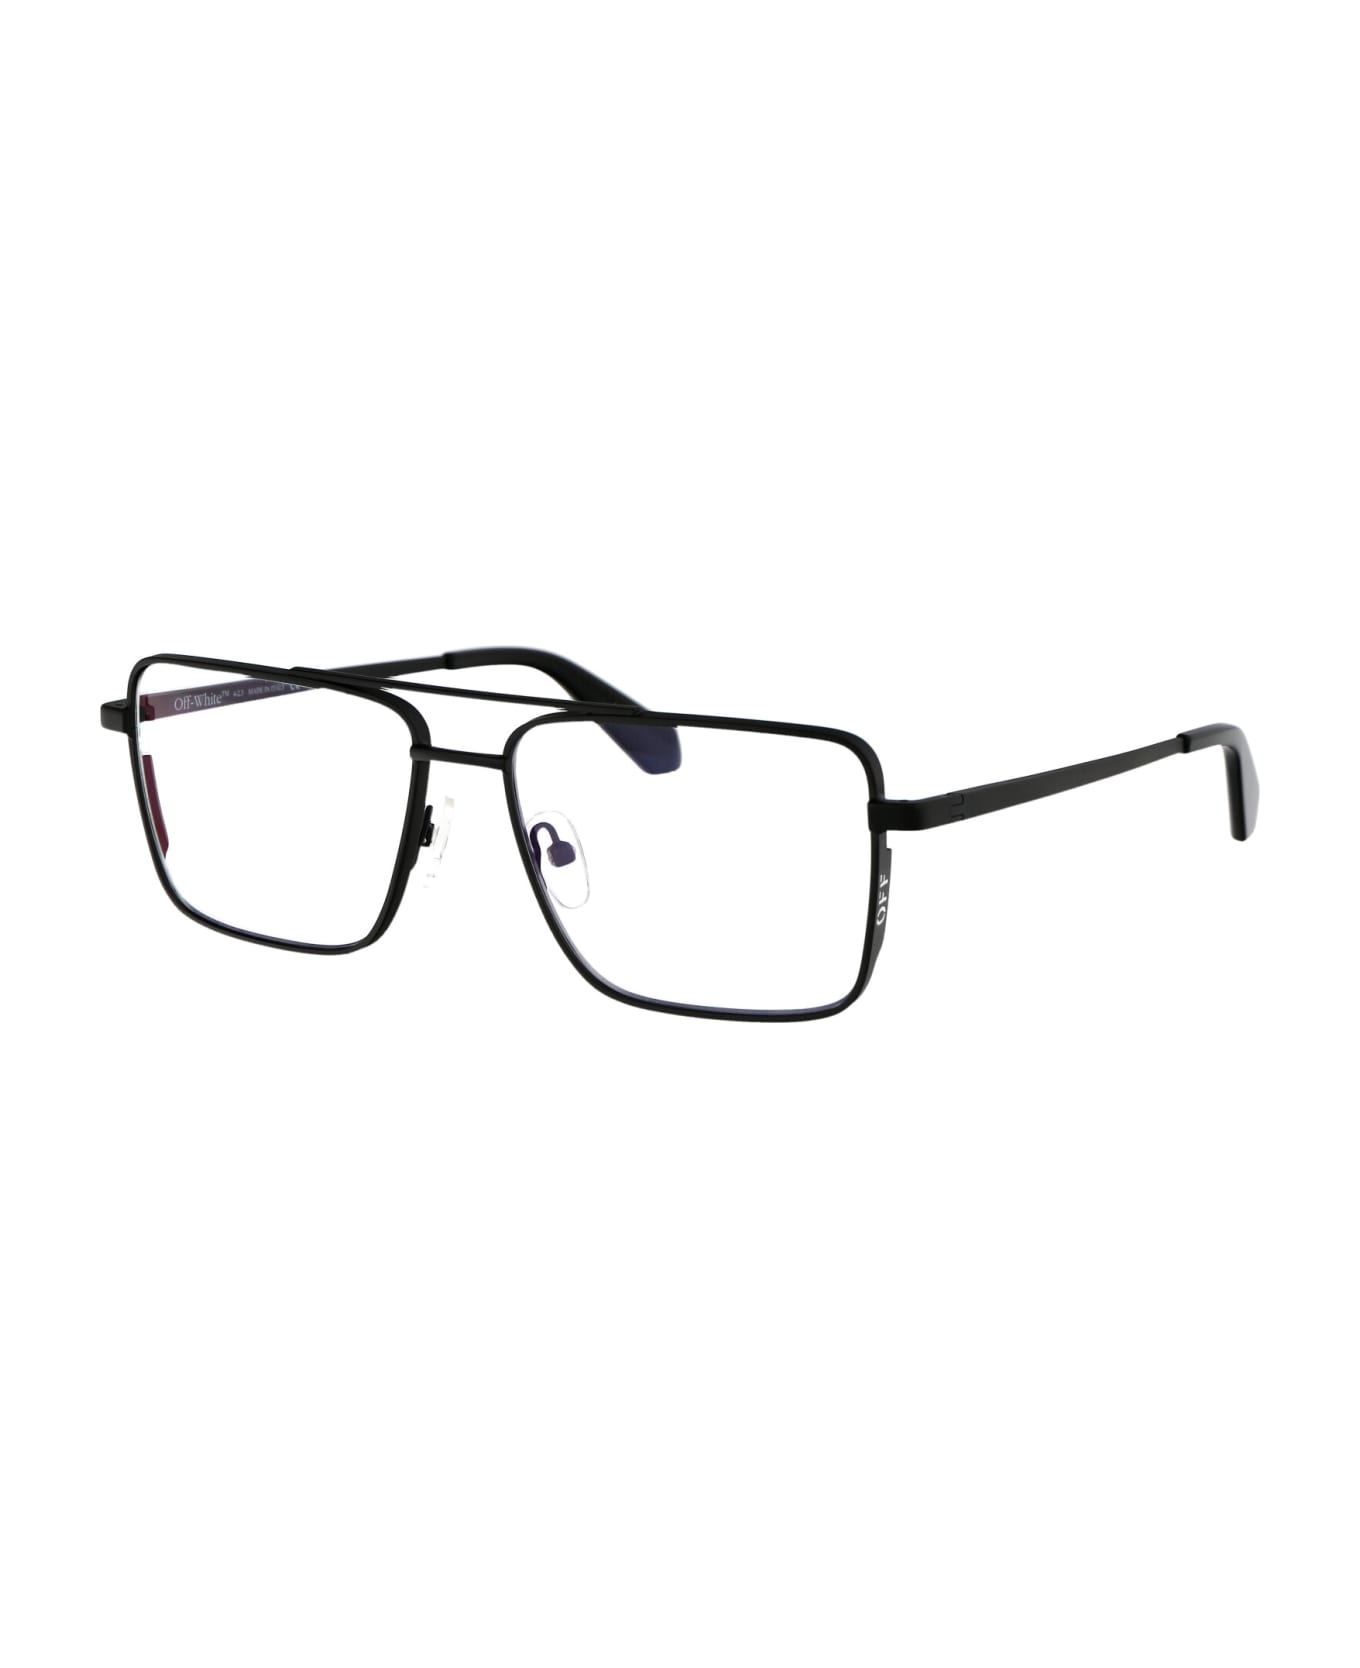 Off-White Optical Style 66 Glasses - 1000 BLACK